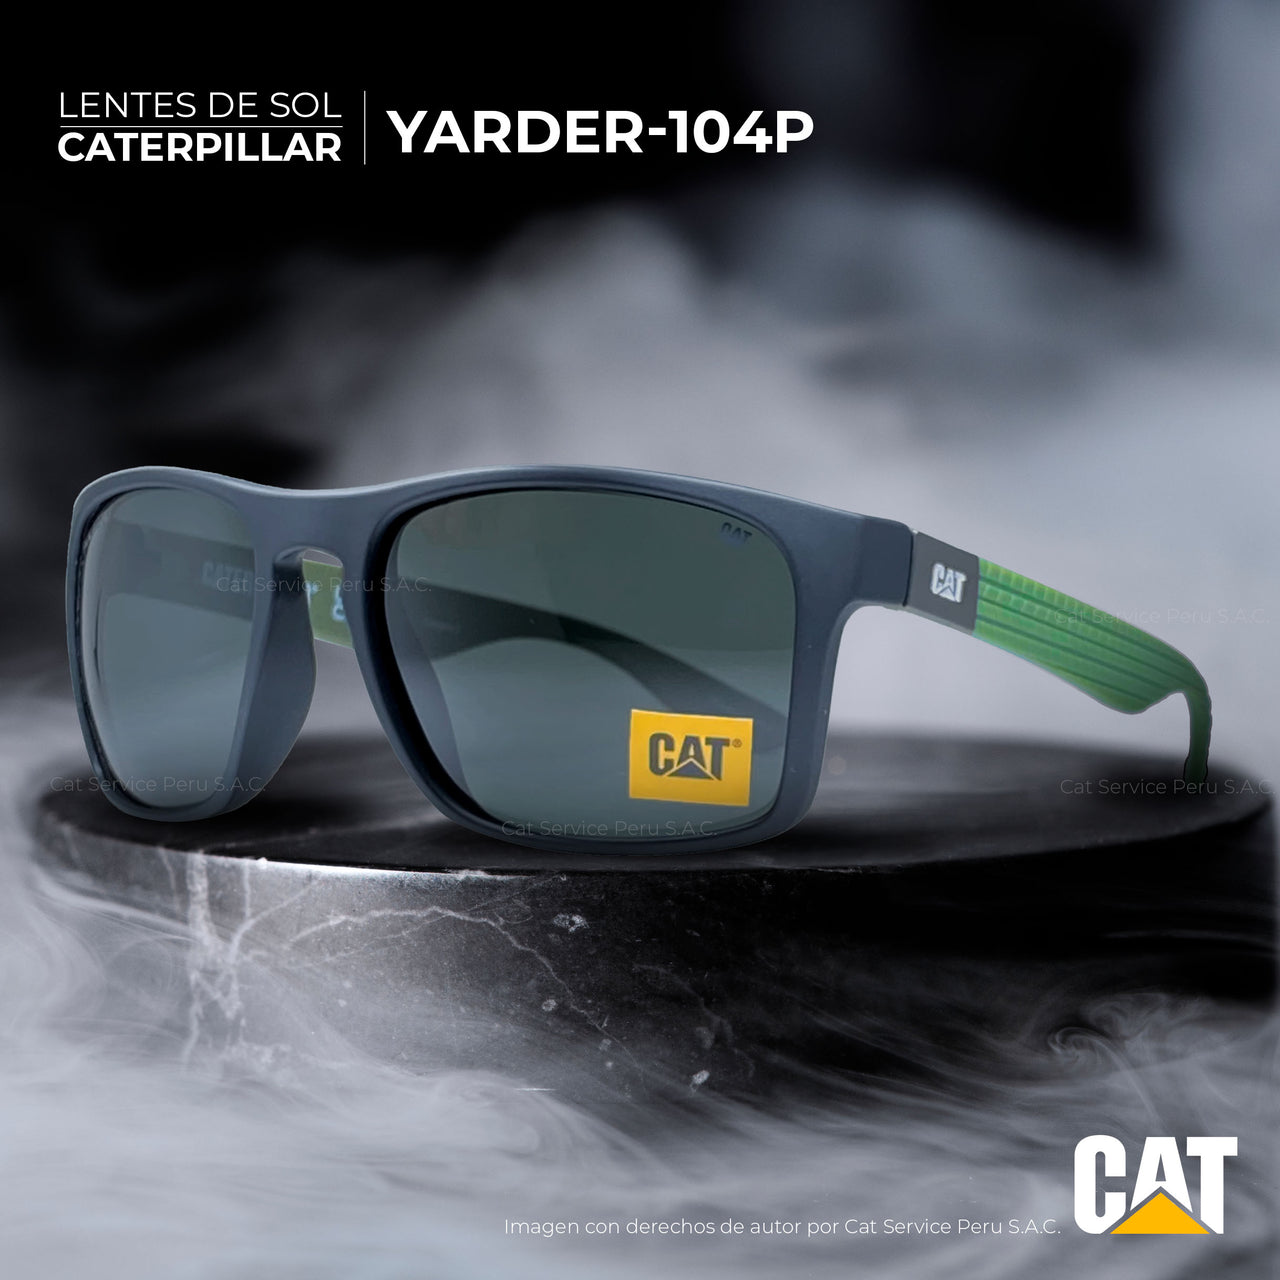 Cat CTS-YARDER-104P Moons Black Polarized Sunglasses 